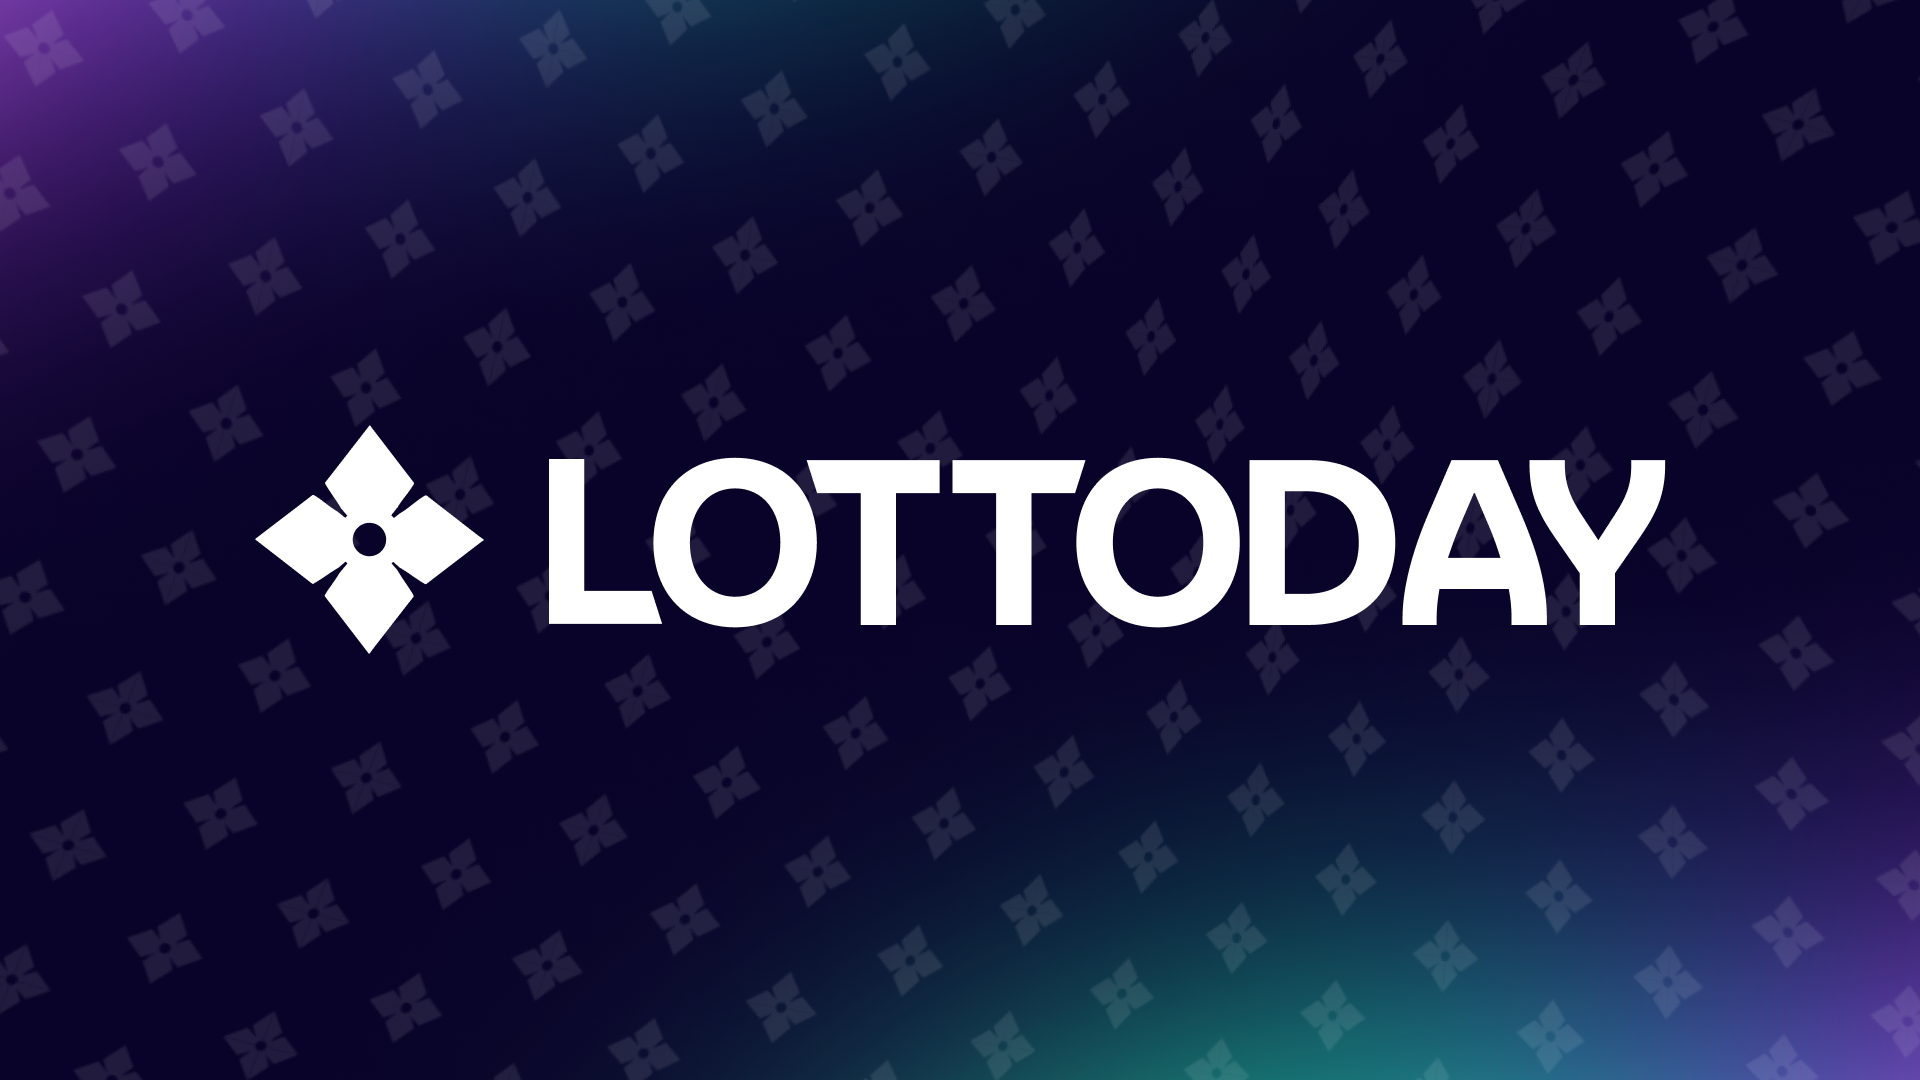 Lottoday tilbyr Gaming Hub NFT-er i det begrensede forhåndssalget